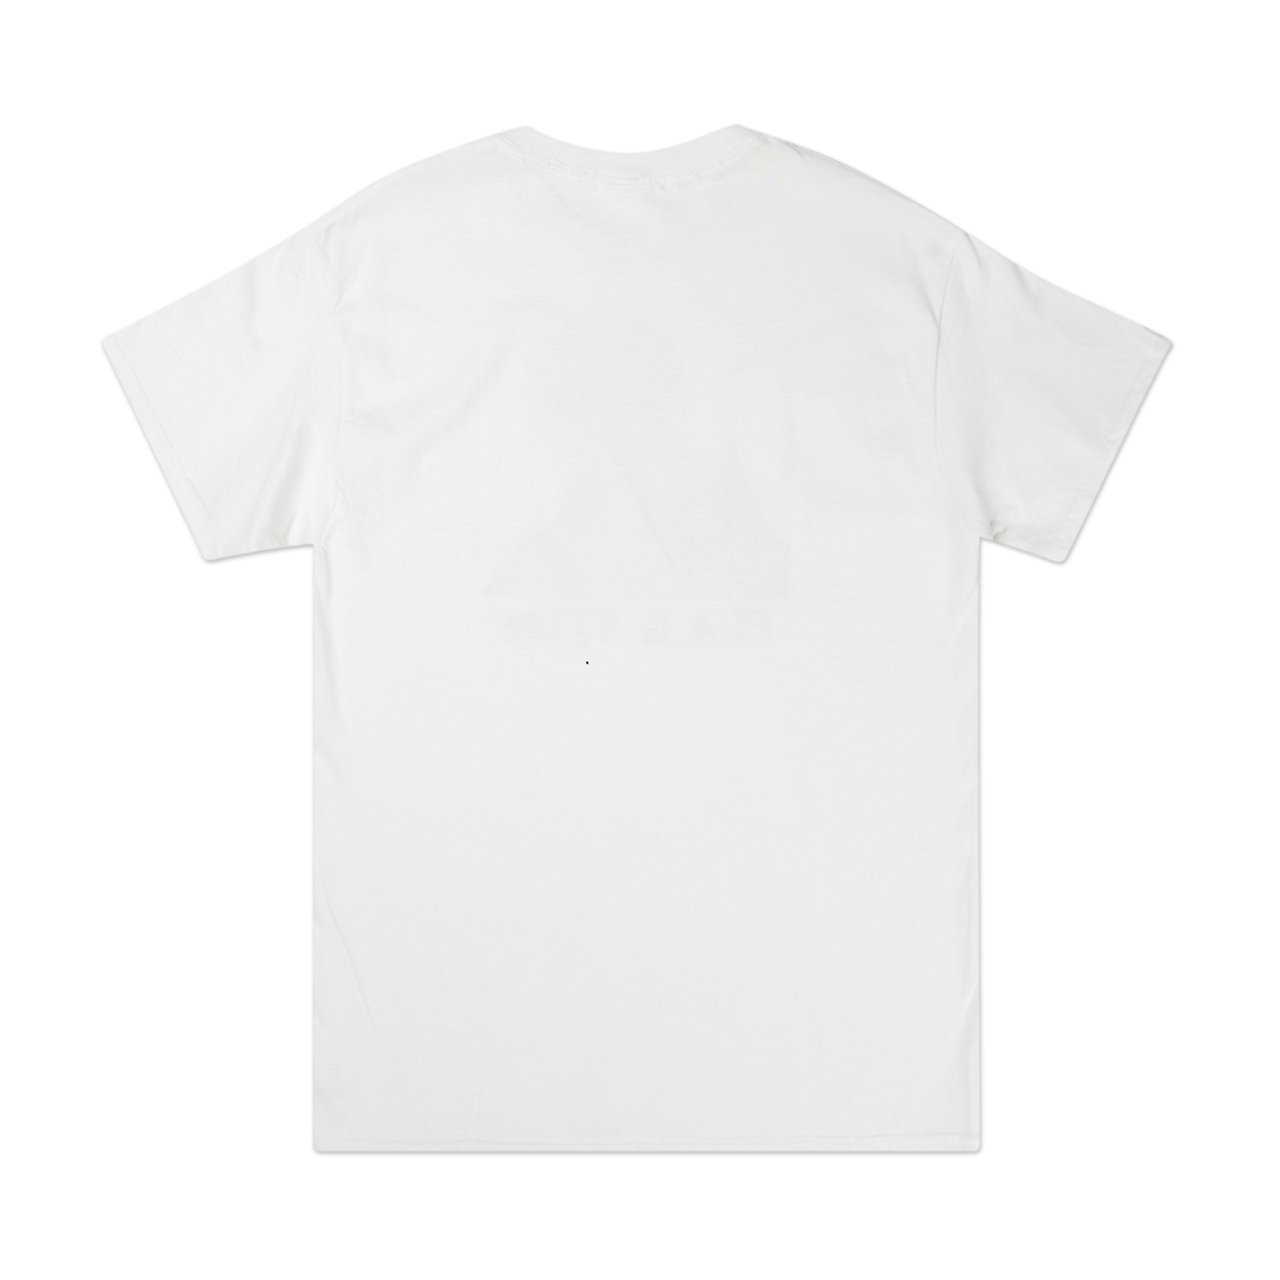 flagstuff "wish" t-shirt (white) - 19aw-fs-55 - a.plus - Image - 2